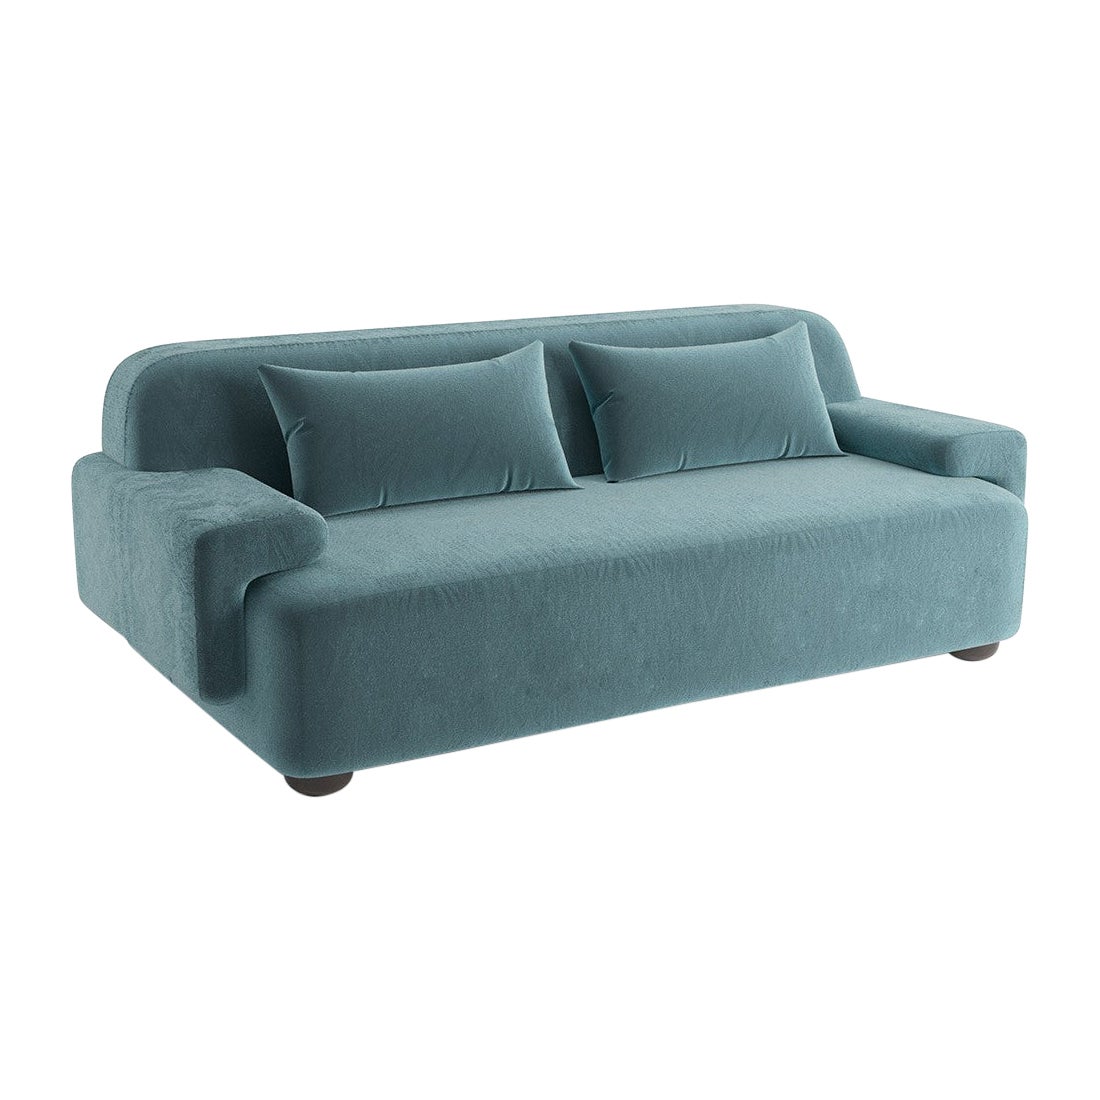 Popus Editions Lena 3 Seater Sofa in Blue Verone Velvet Upholstery